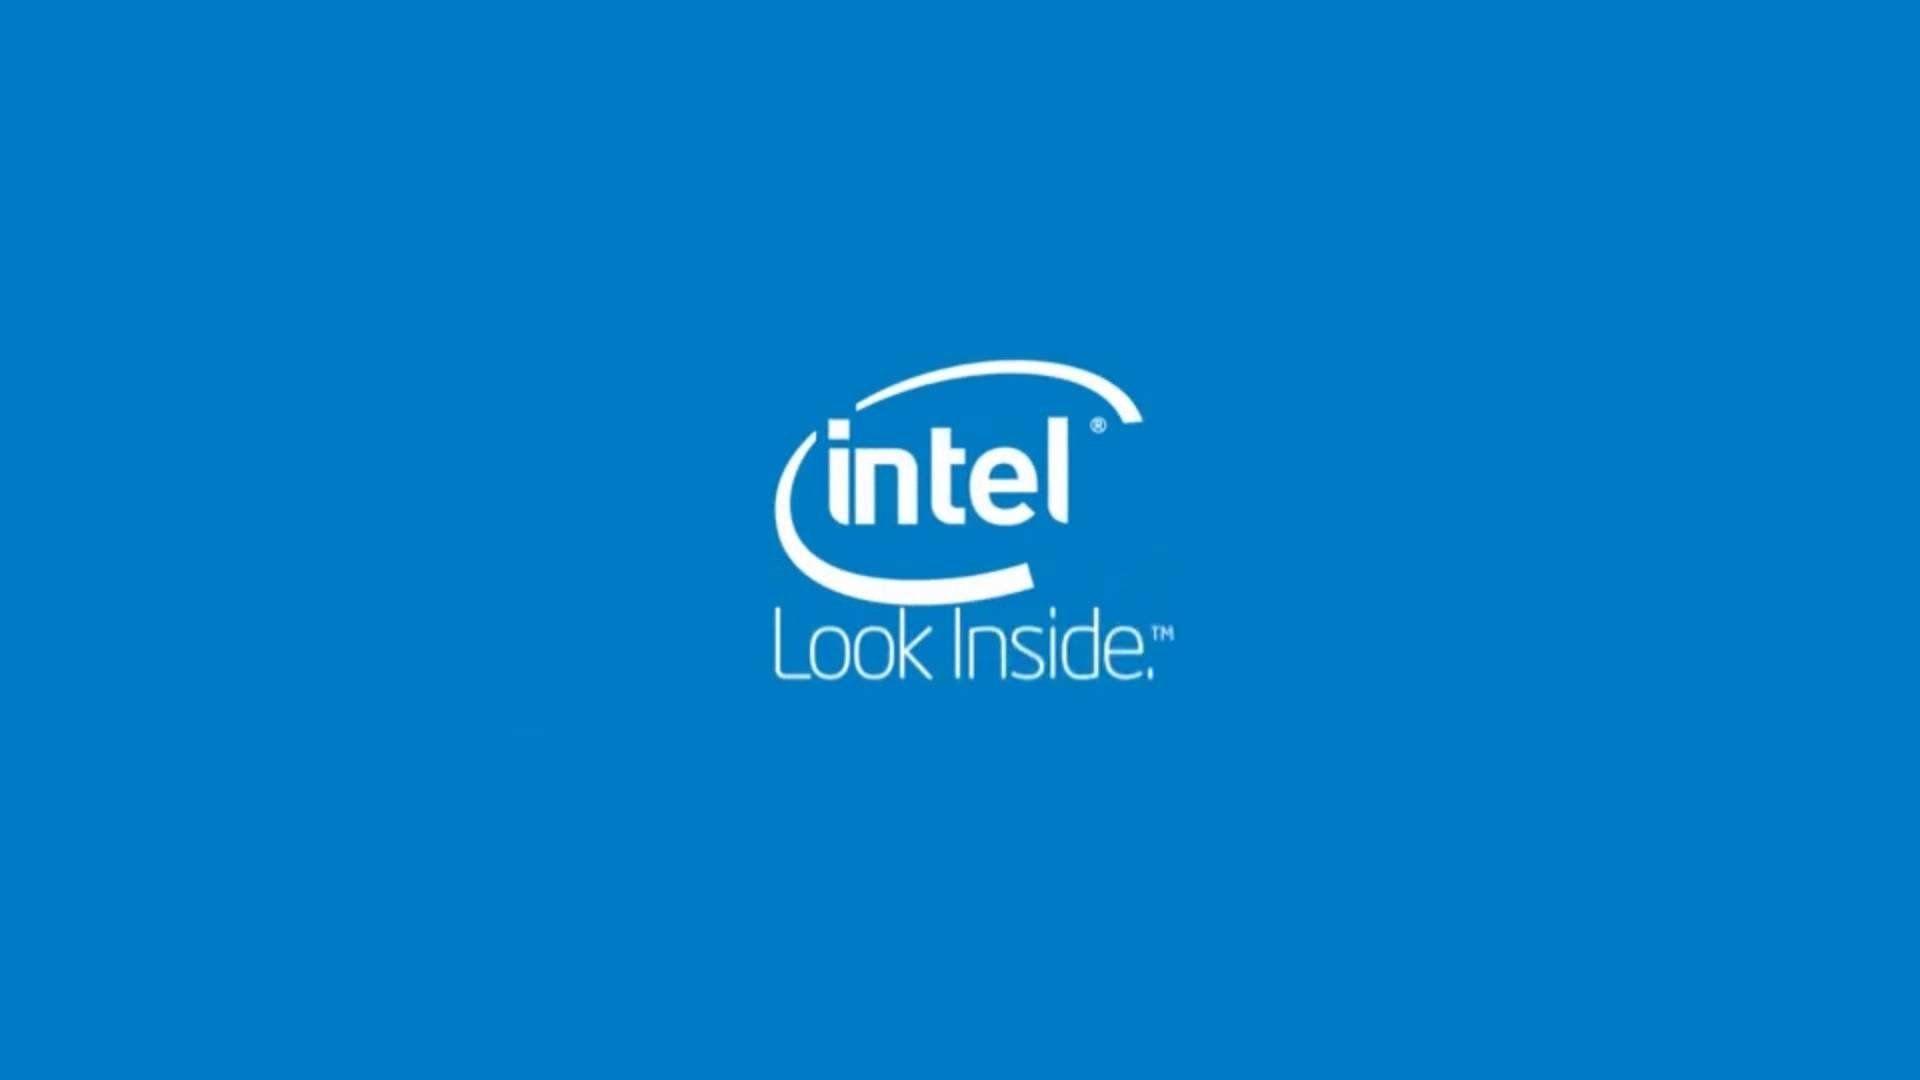 Intel Wallpaper, HD Intel Wallpaper. Intel Best Pics Collection